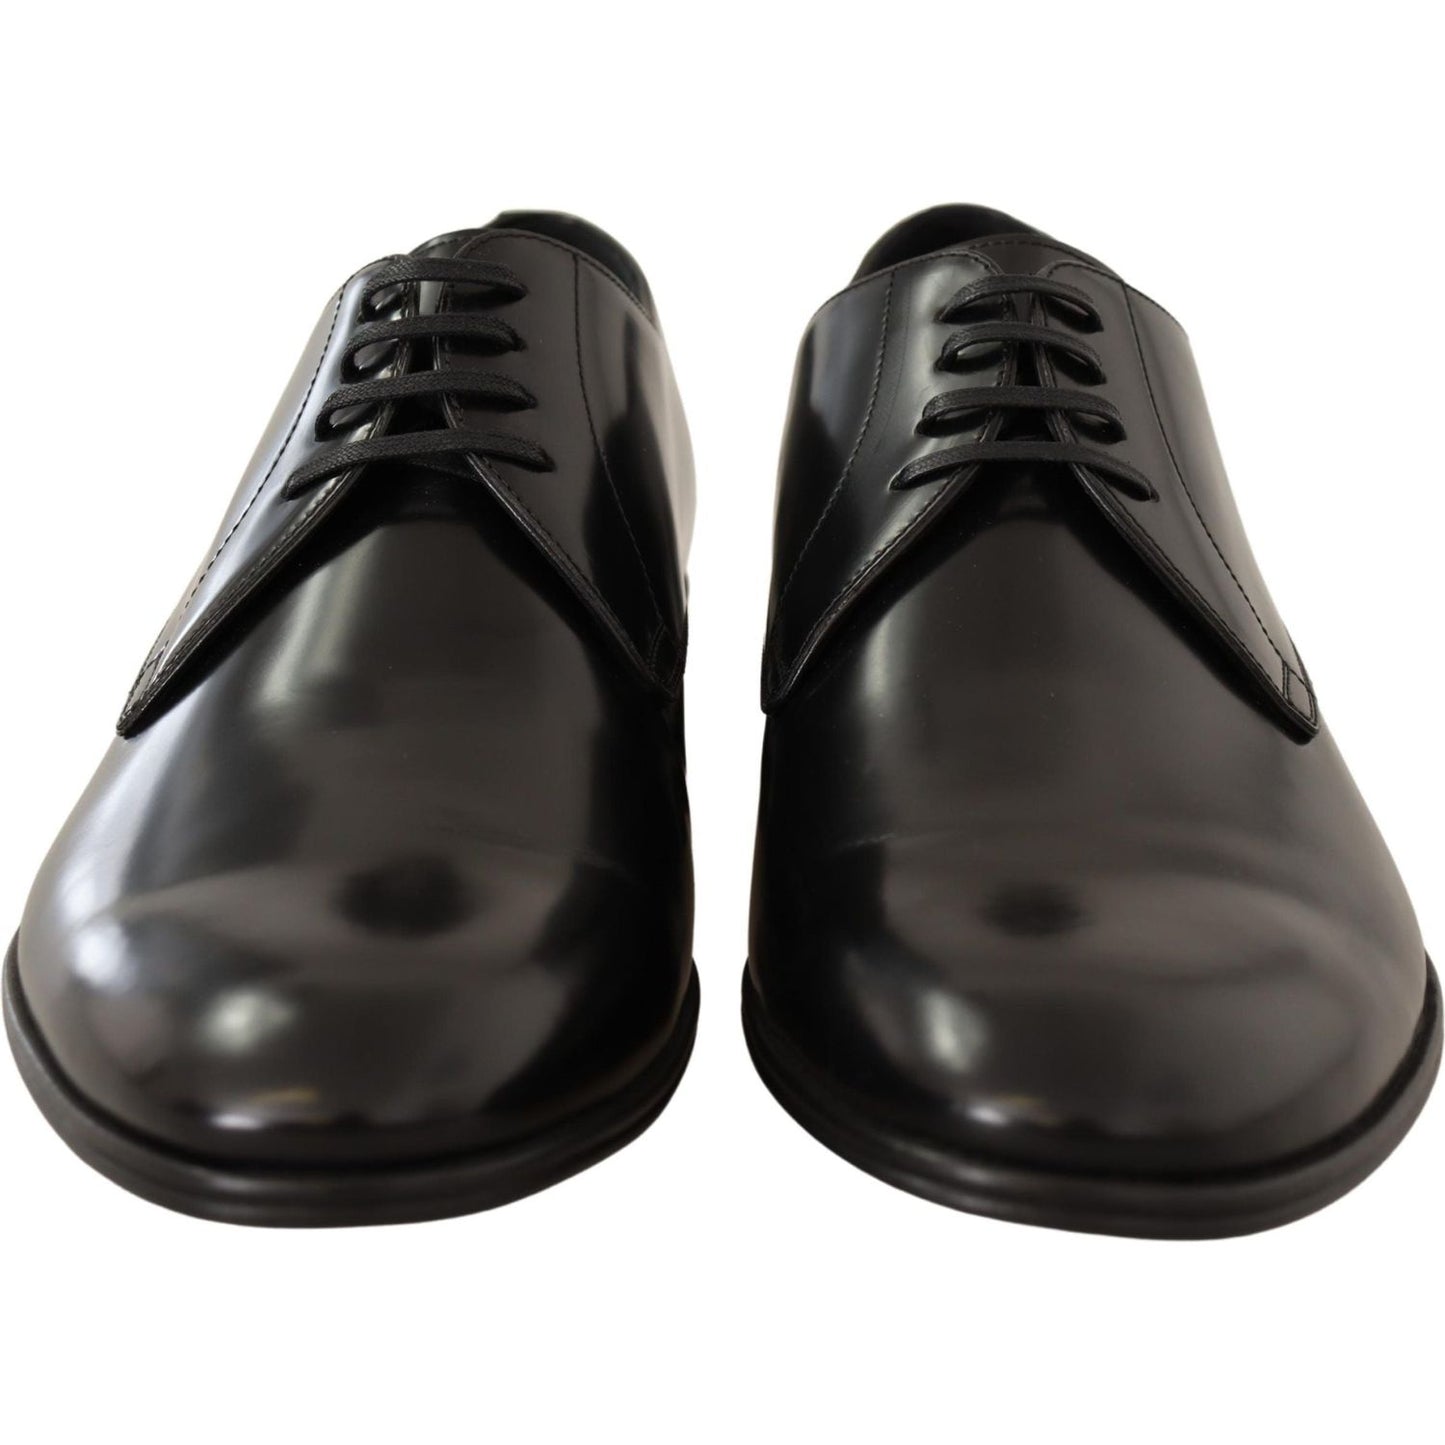 Dolce & Gabbana Elegant Black Leather Derby Shoes black-leather-lace-up-men-dress-derby-shoes-2 Dress Shoes IMG_3700-scaled-c40aff0f-d88.jpg